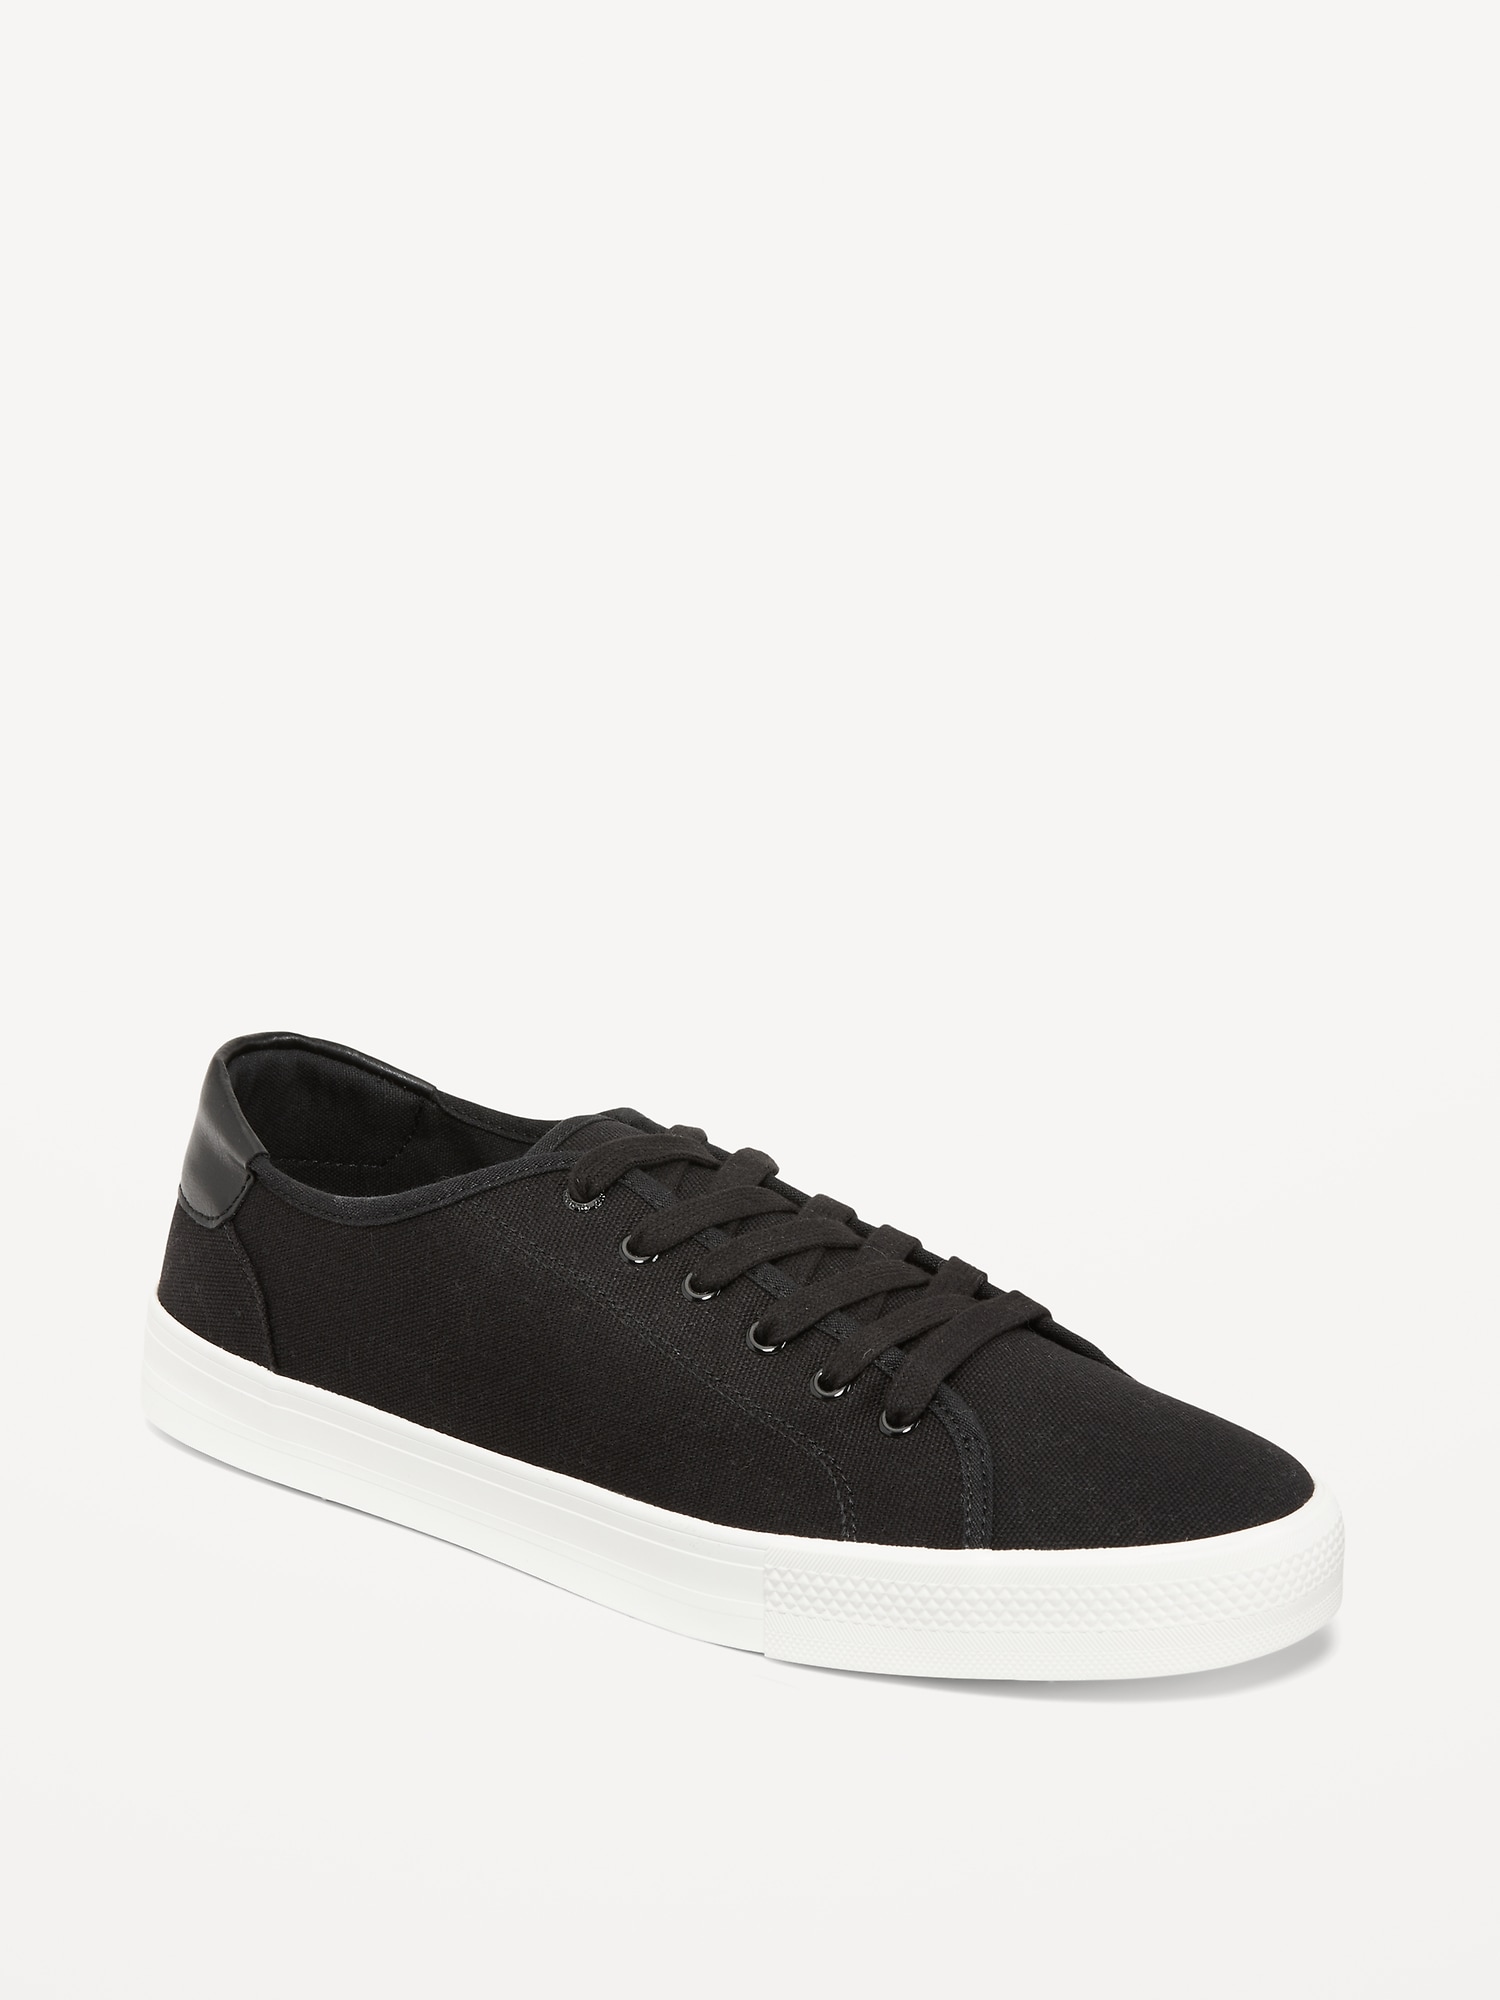 Amazon.com | Puma Mens Smash 3.0 Lace Up Sneakers Shoes Casual - Grey -  Size 8 M | Shoes